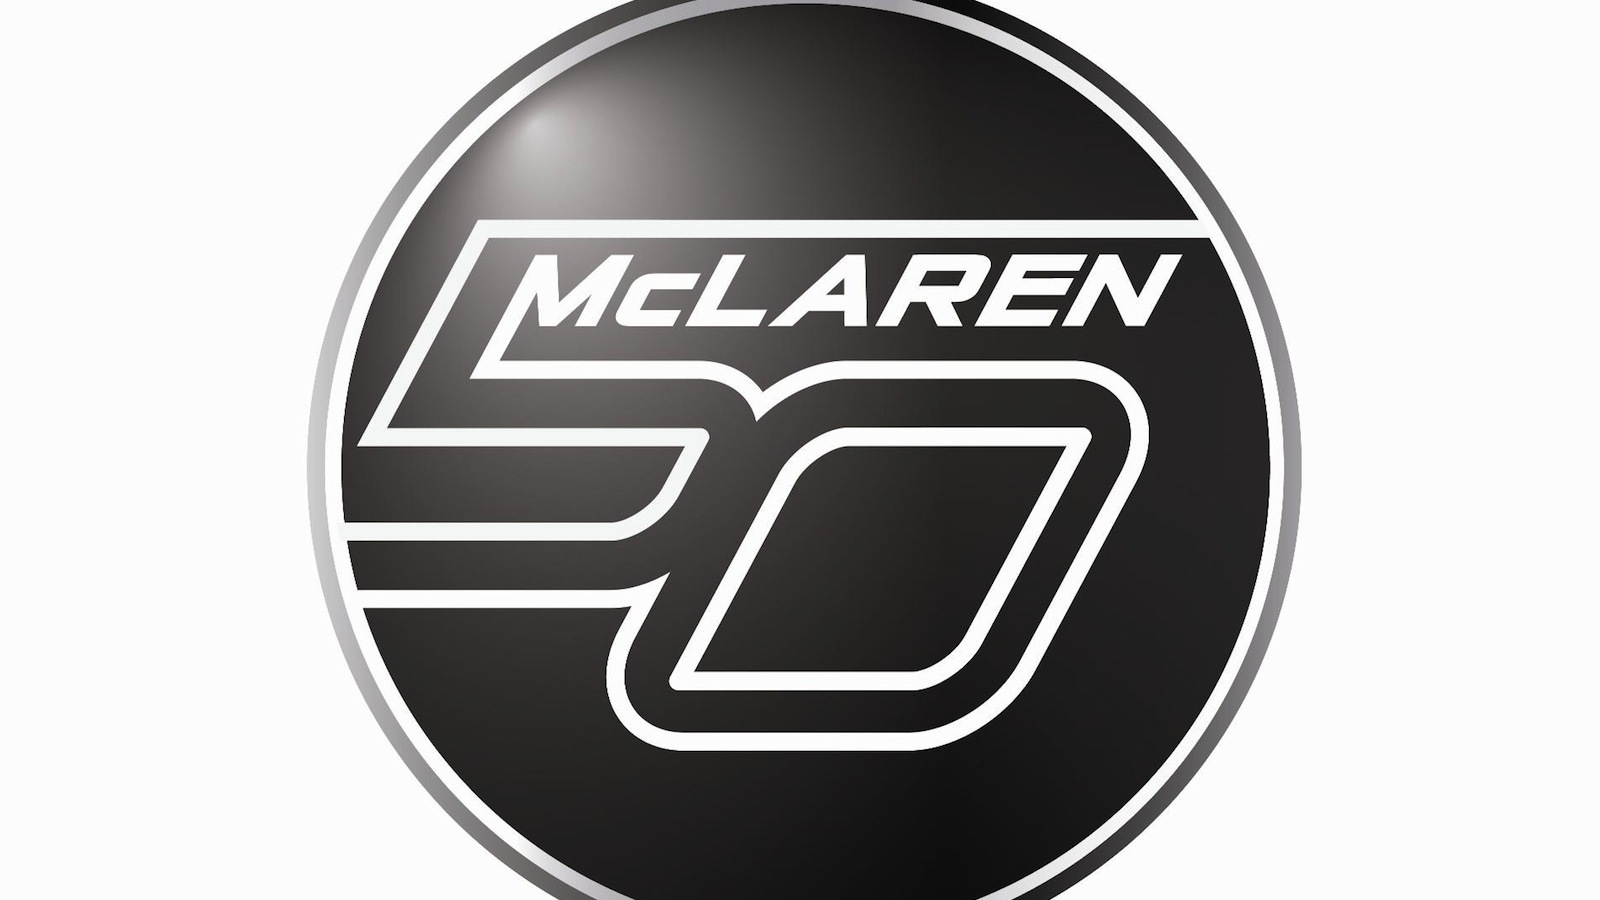 McLaren celebrates 50 years in 2013 - image: McLaren